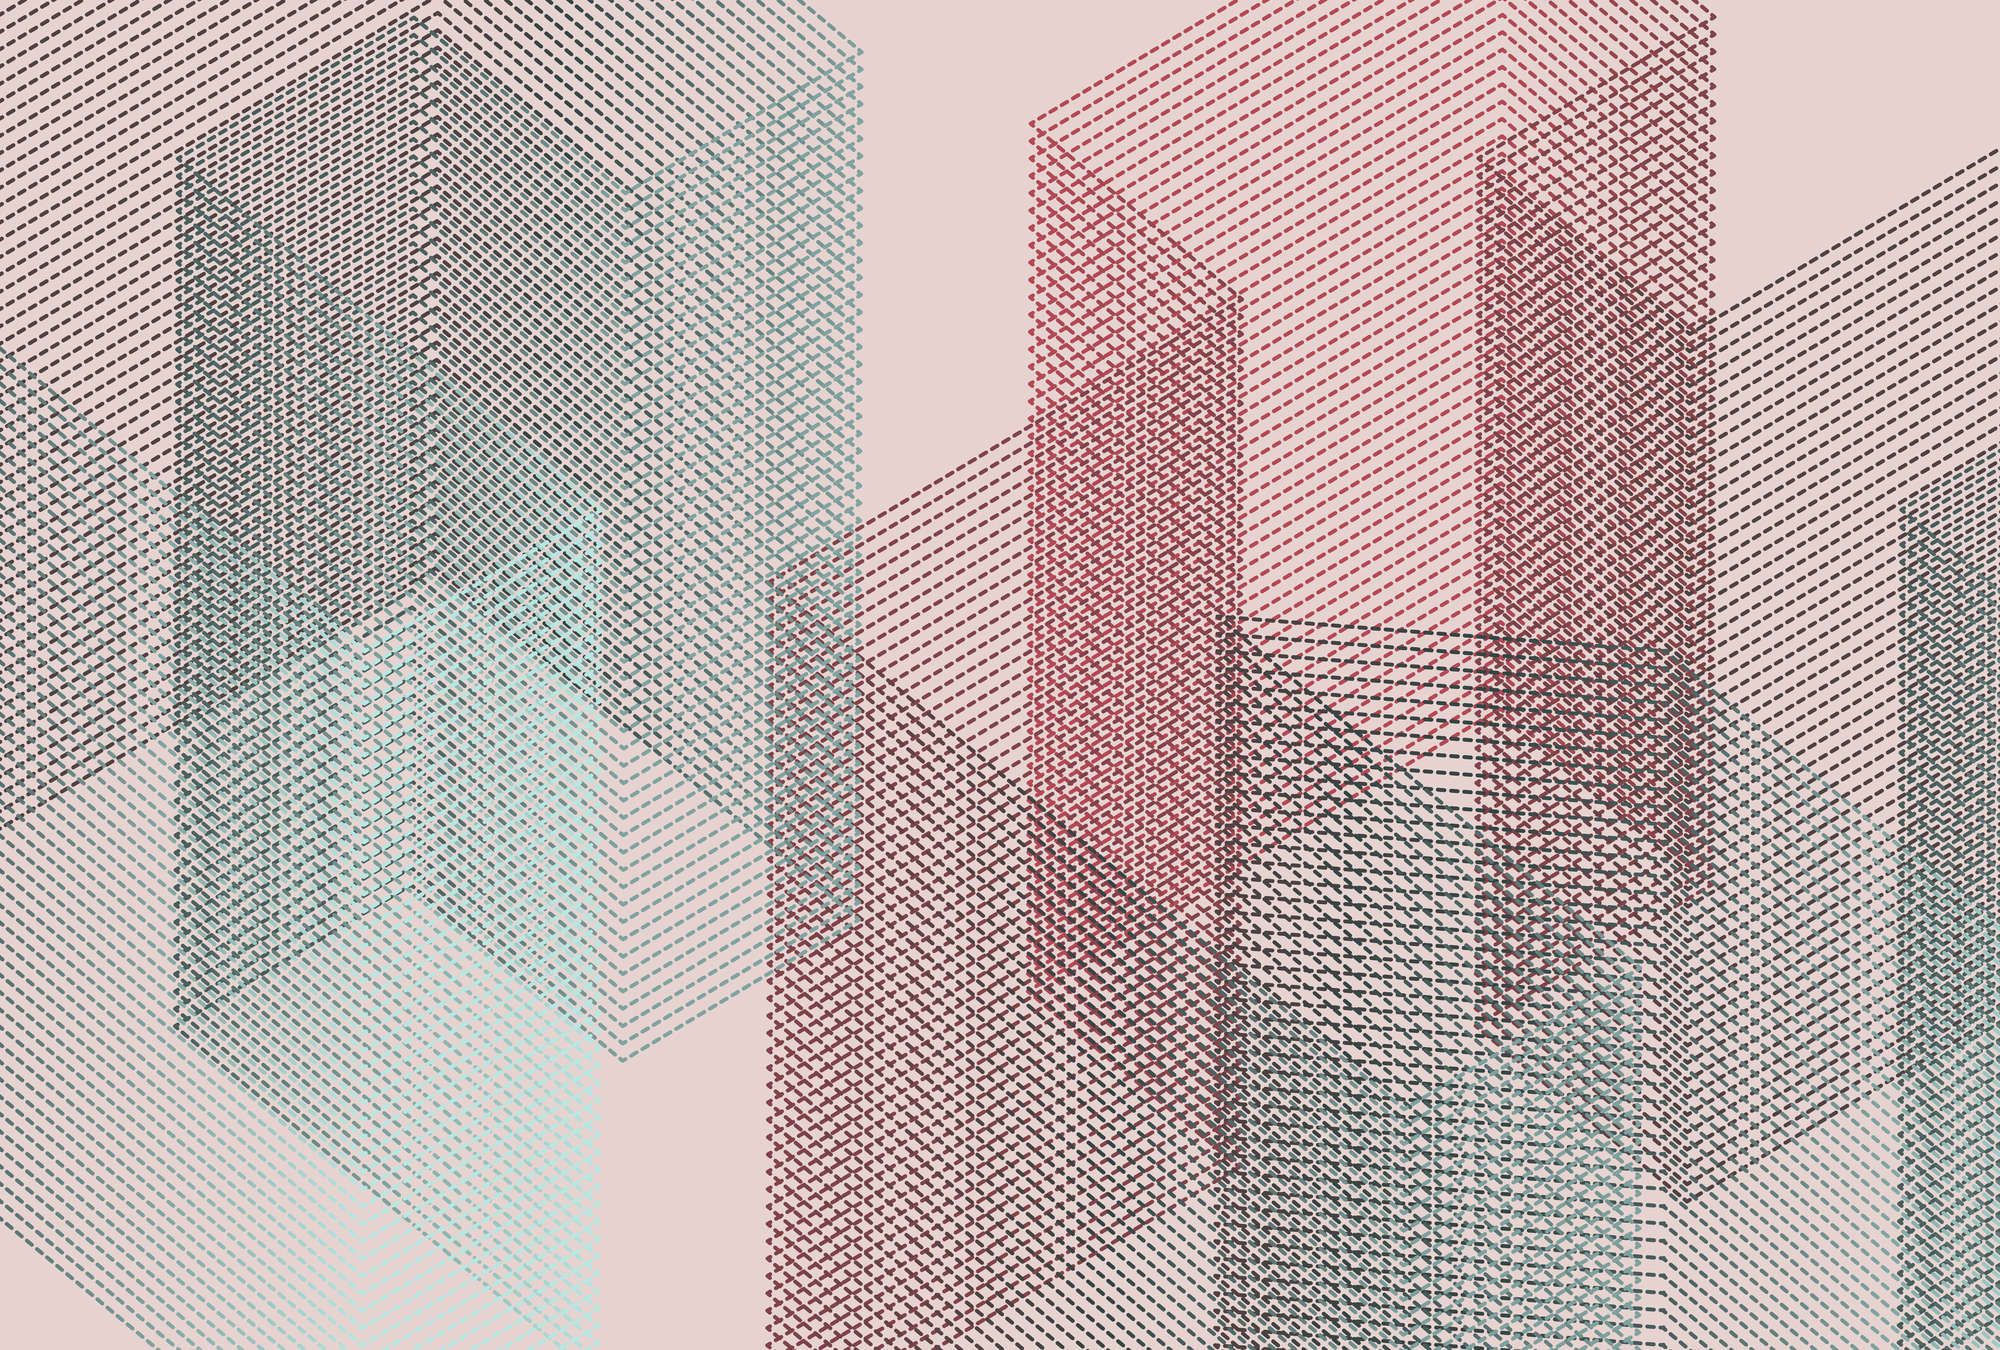             Photo wallpaper »mesh 1« - Abstract 3D design - Red, Blue | Light textured non-woven
        